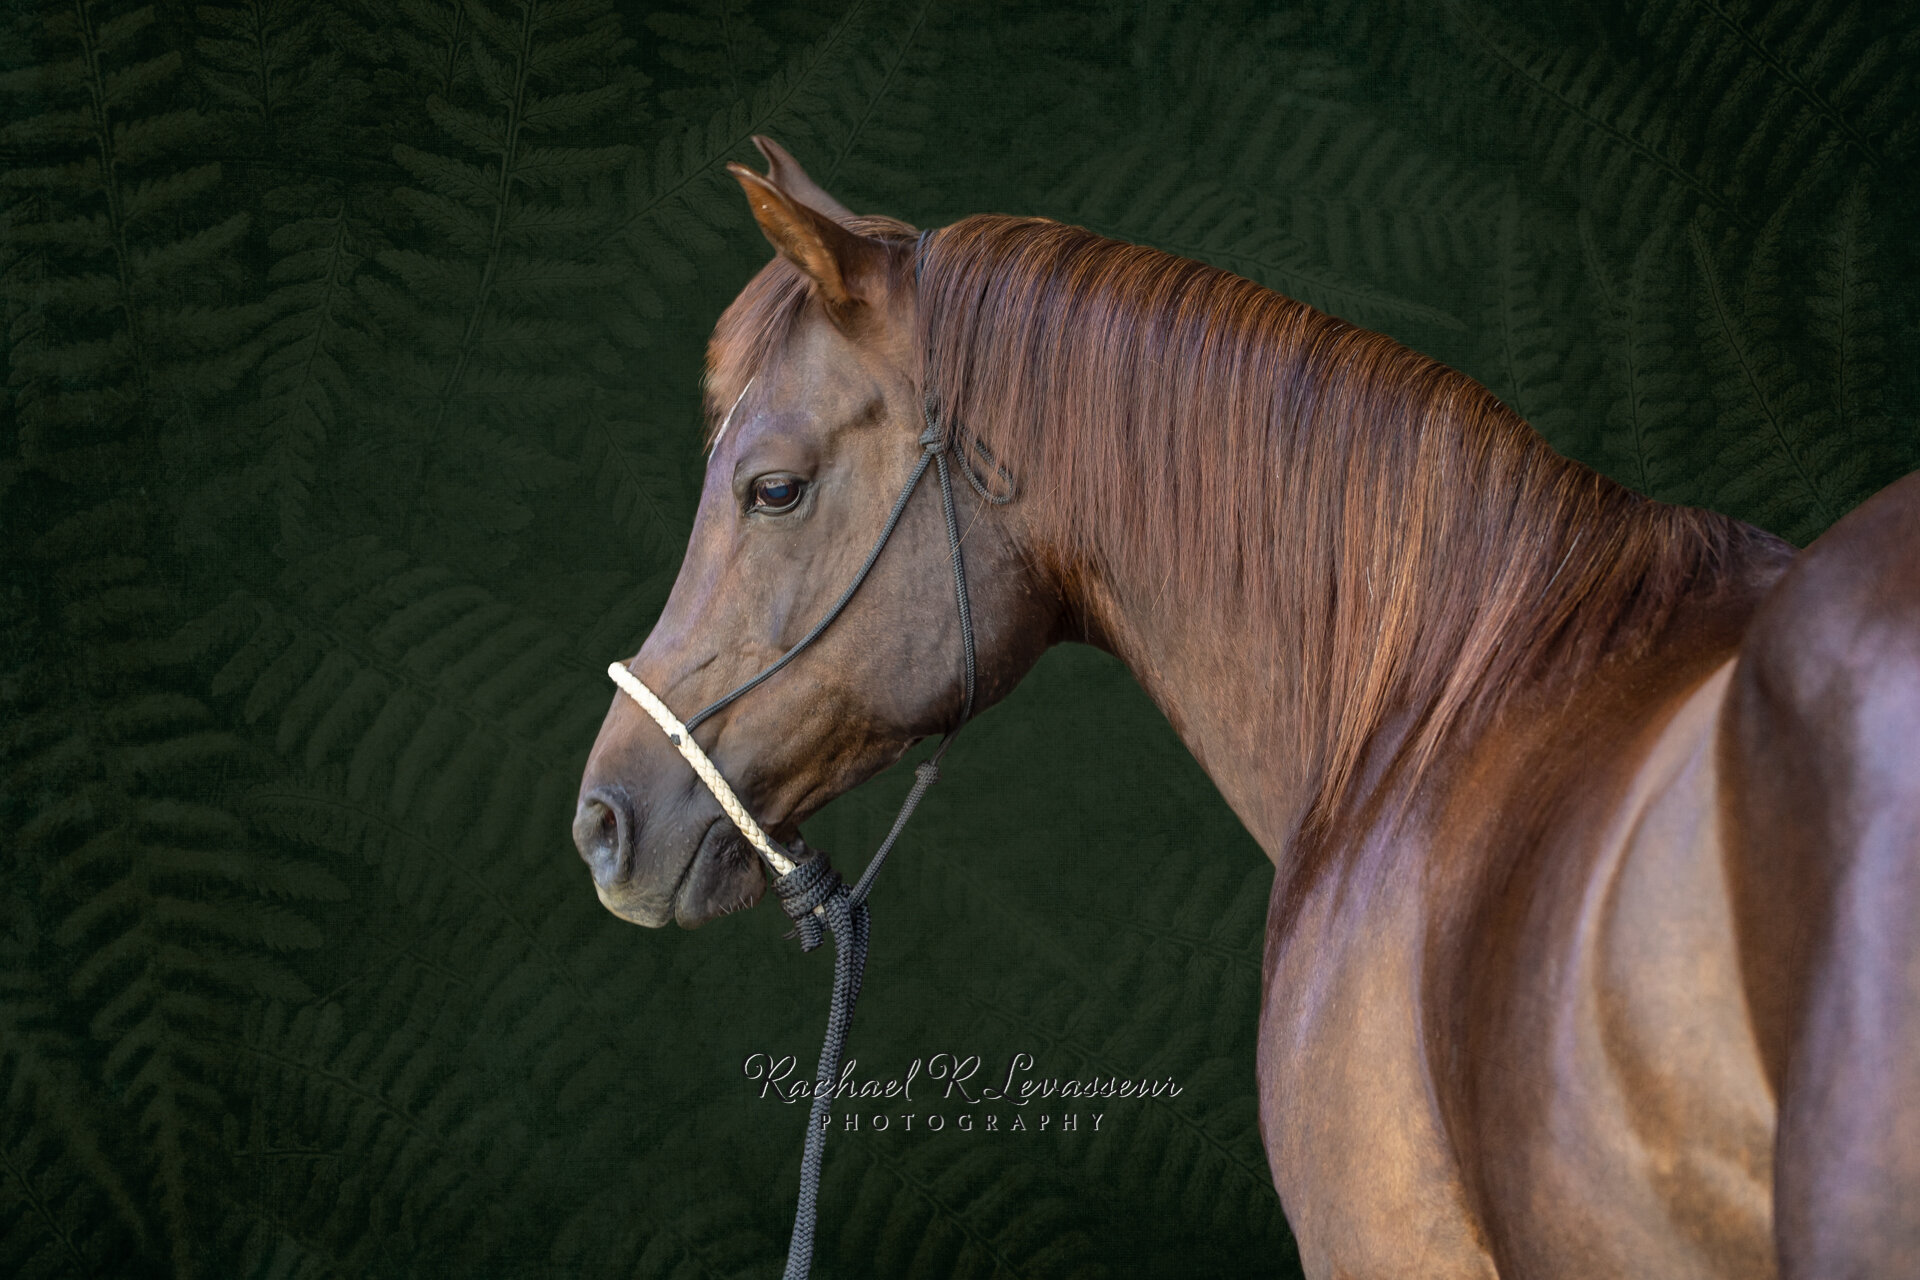 jack-rachael-renee-photograhy-equine-horse-portrait-web-1.jpg